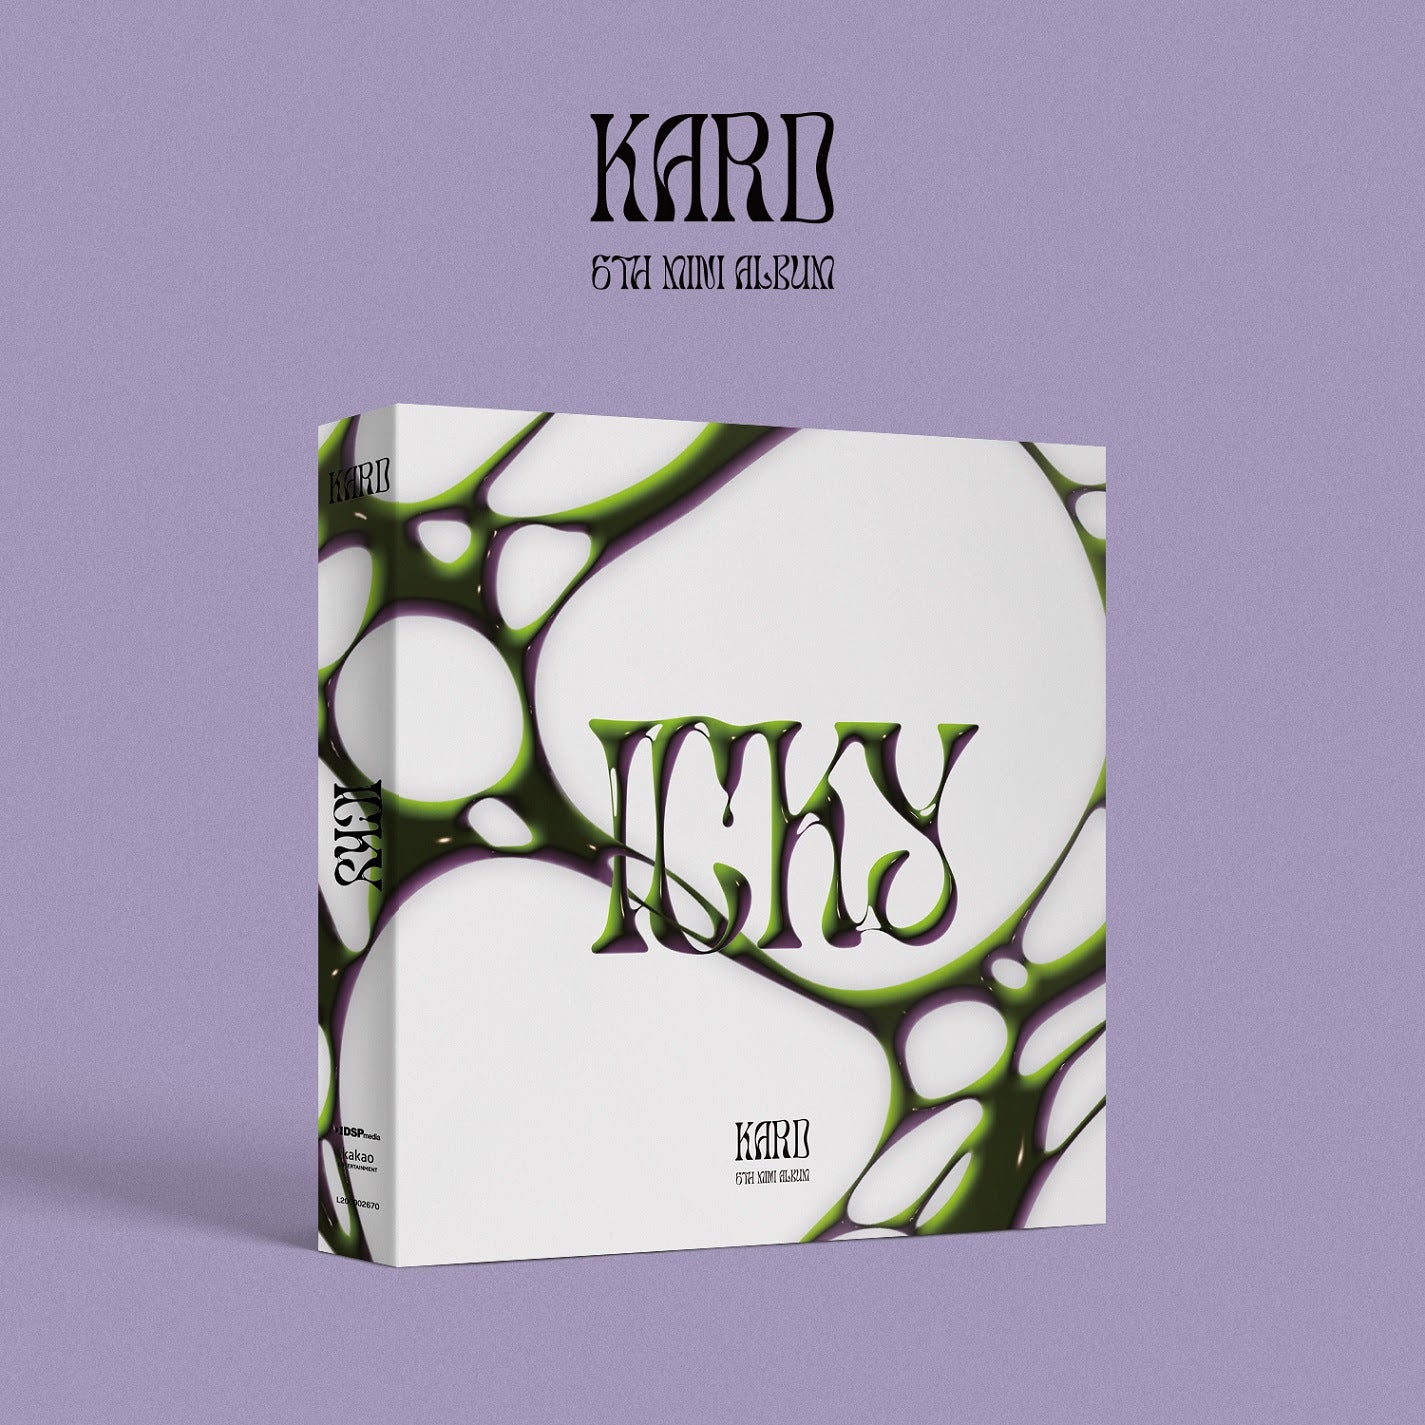 KARD - 6th Mini Album [ICKY] (Special)